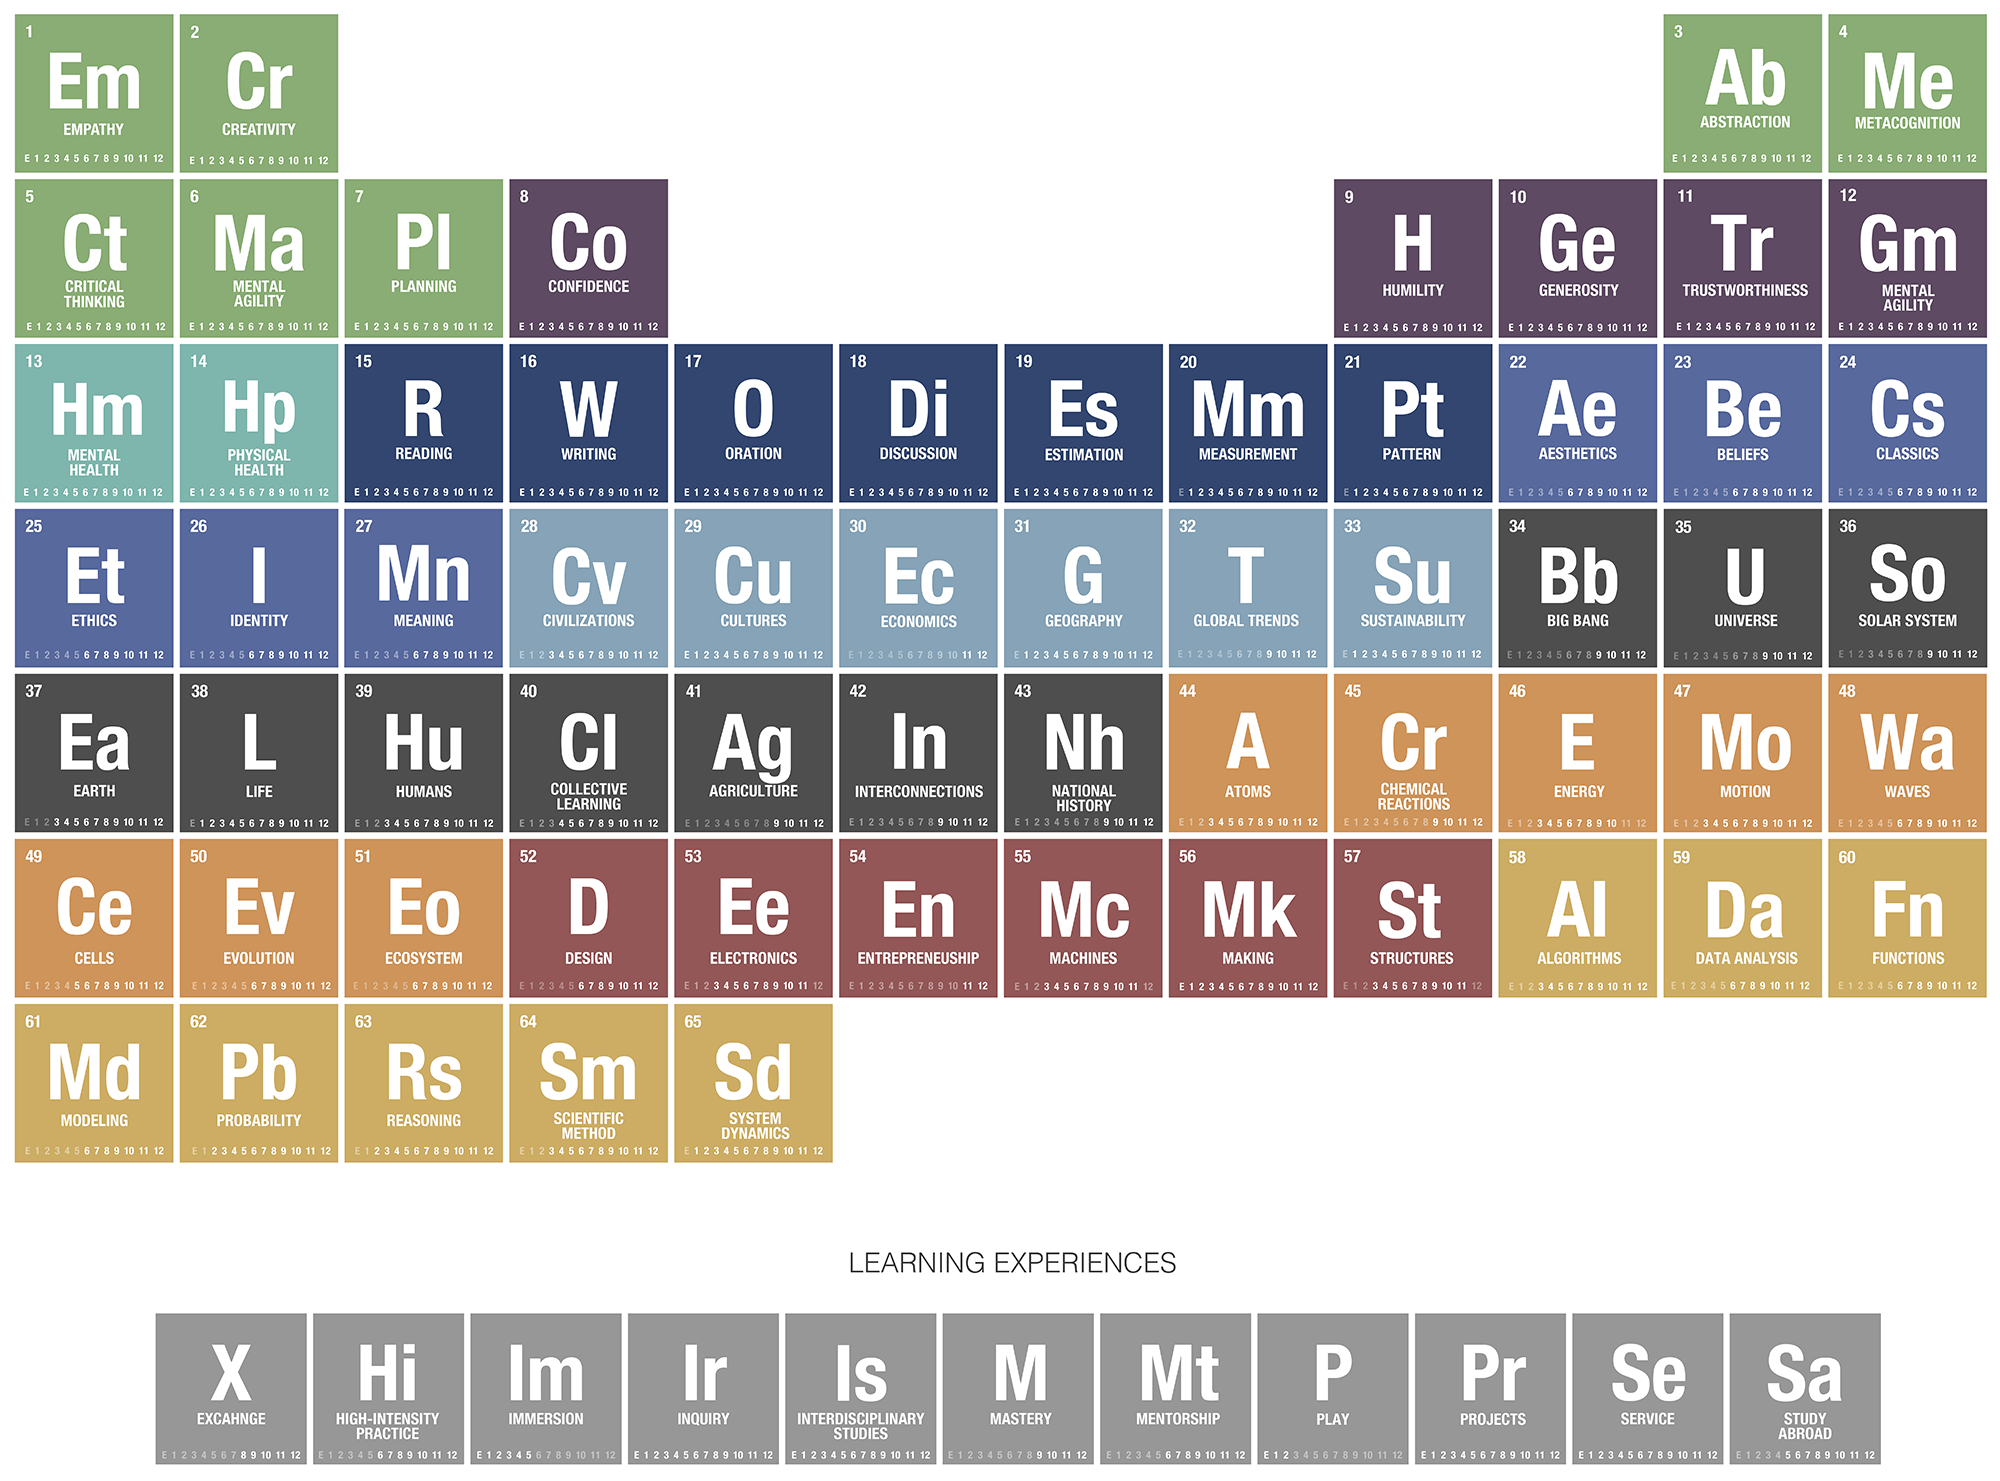 Element world. Elements. C5c99 элемент. Elements Elegnet. Mathem elements.